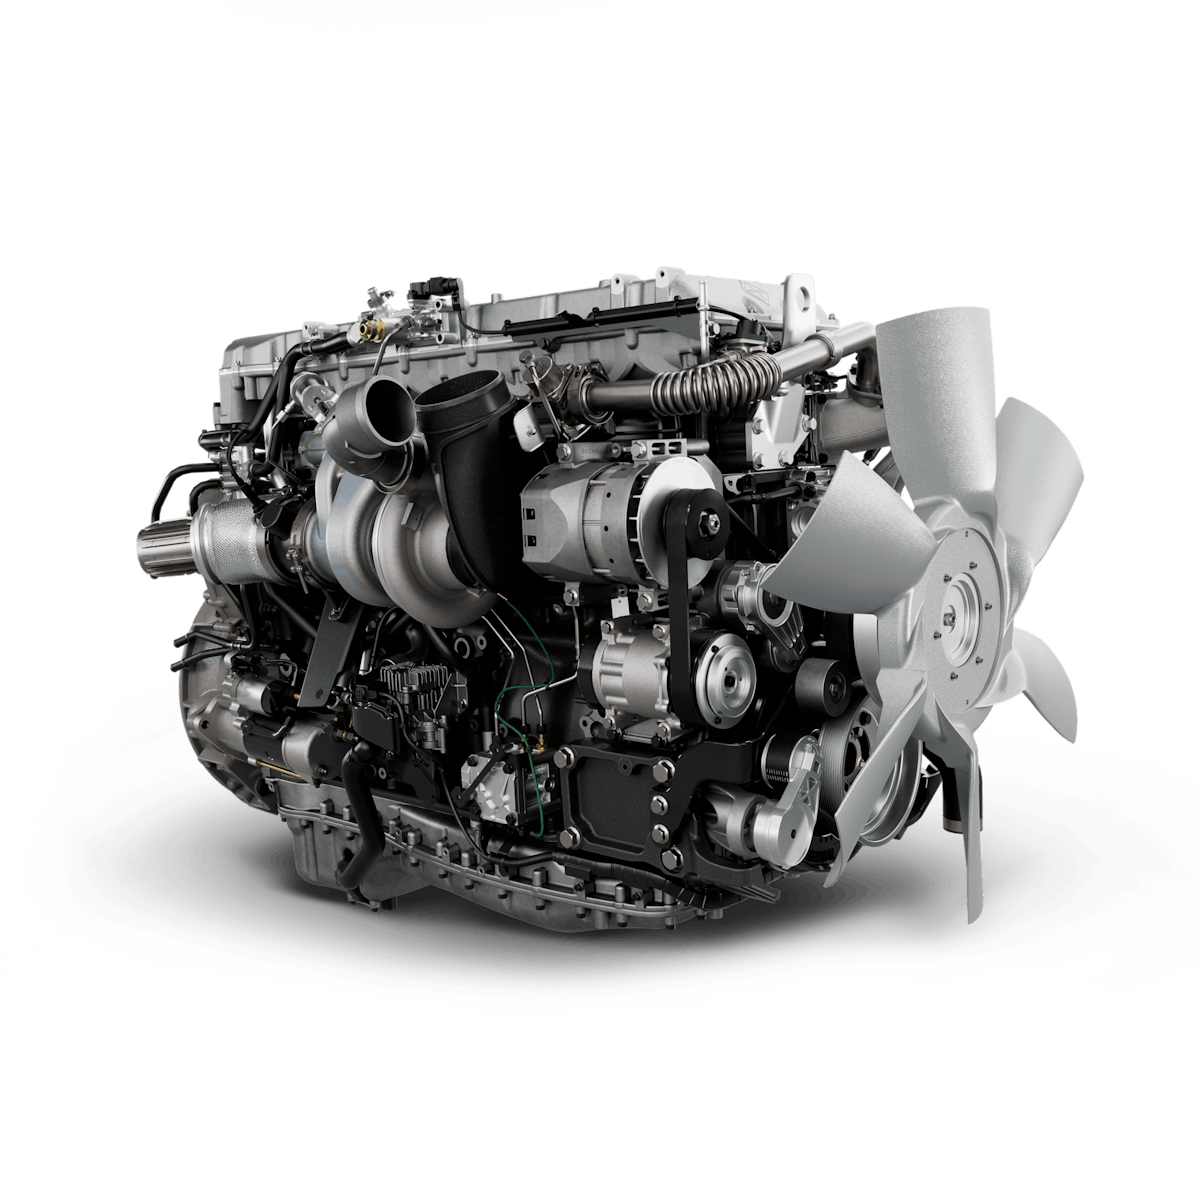 Engines: A26, Cummins, Navistar